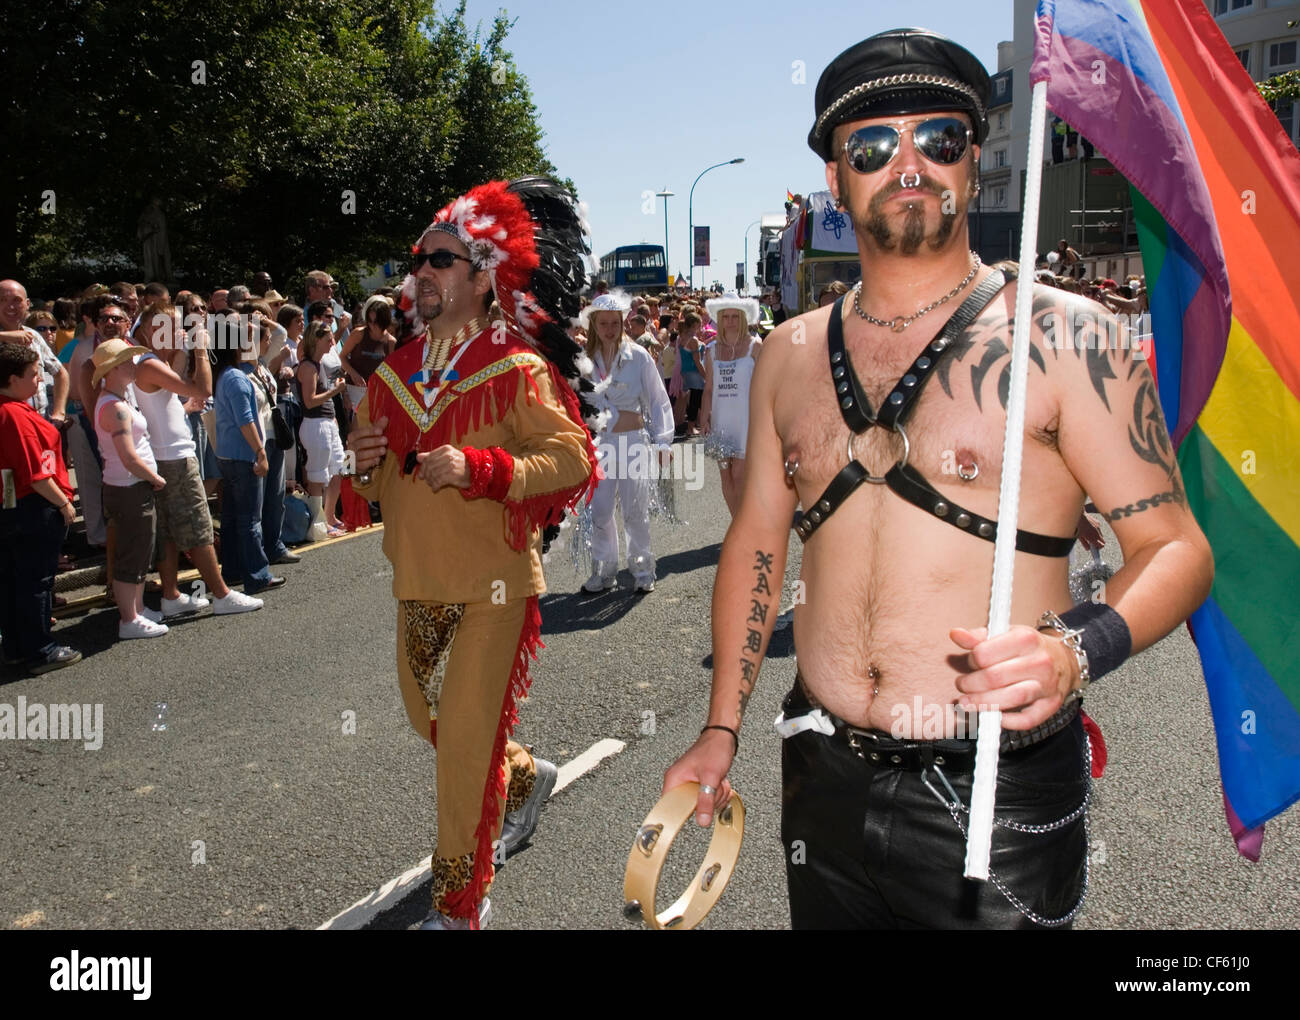 Gay Parade Images 68